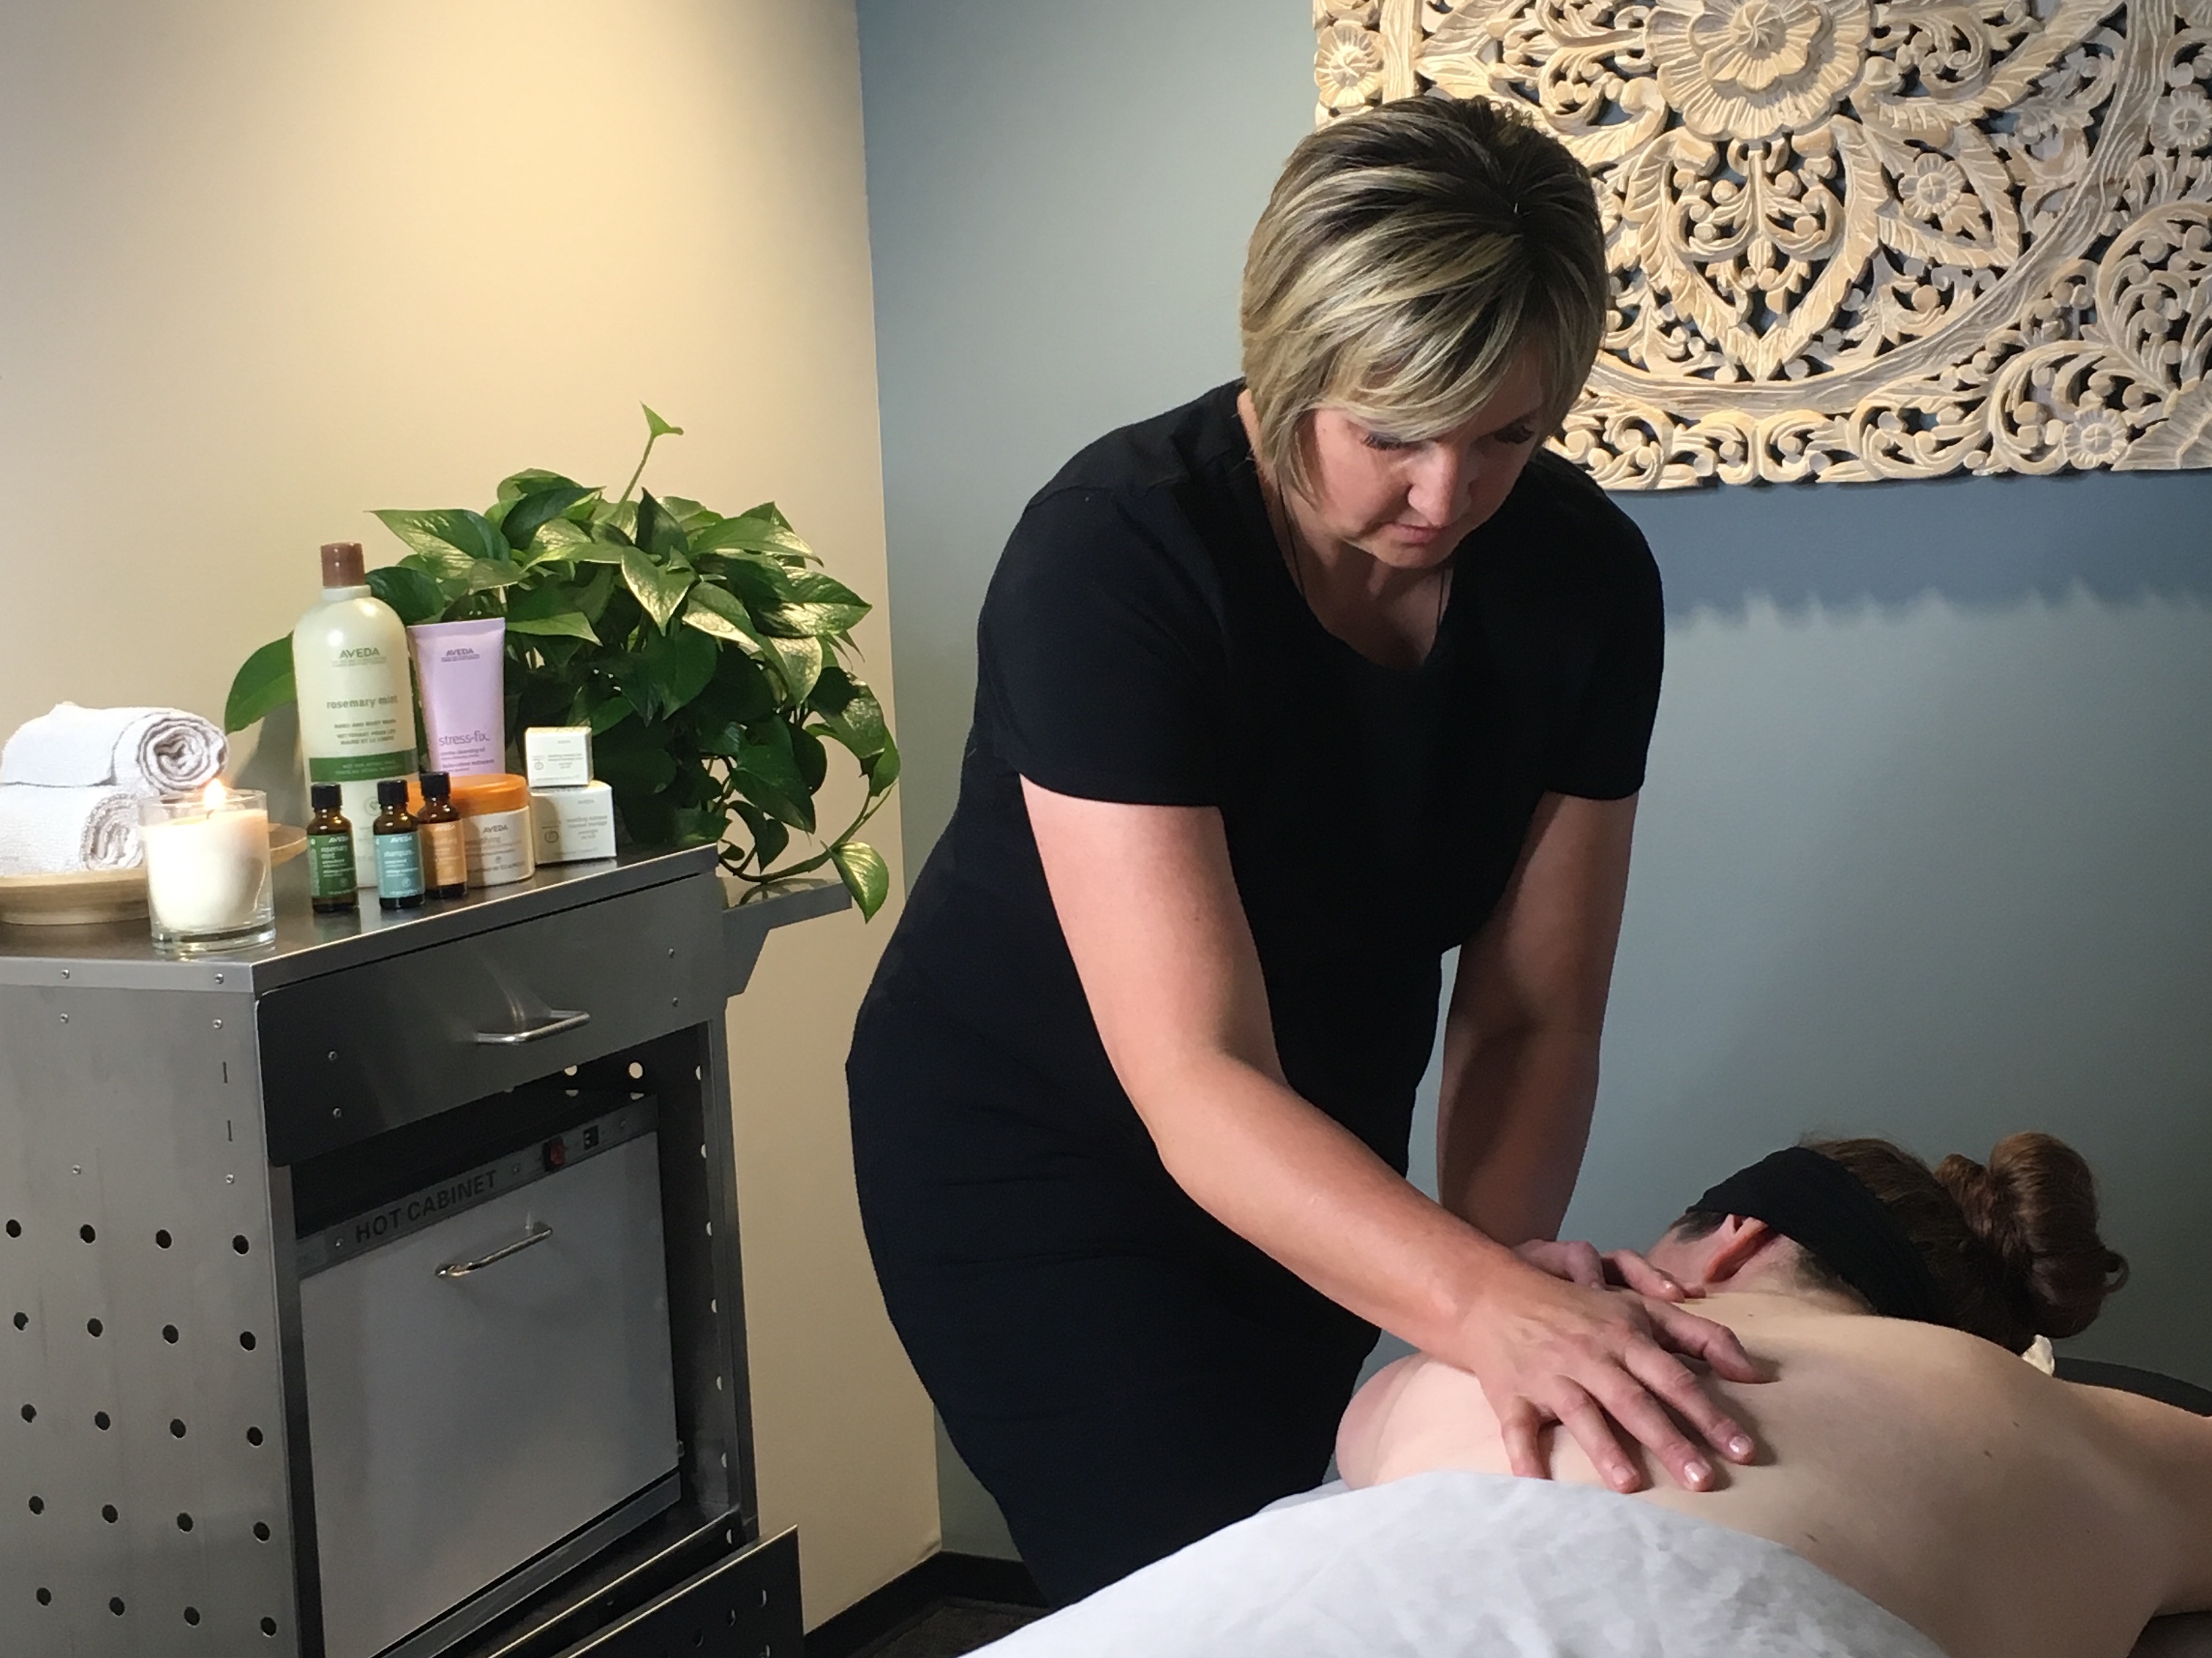 A massage therapist providing massage services